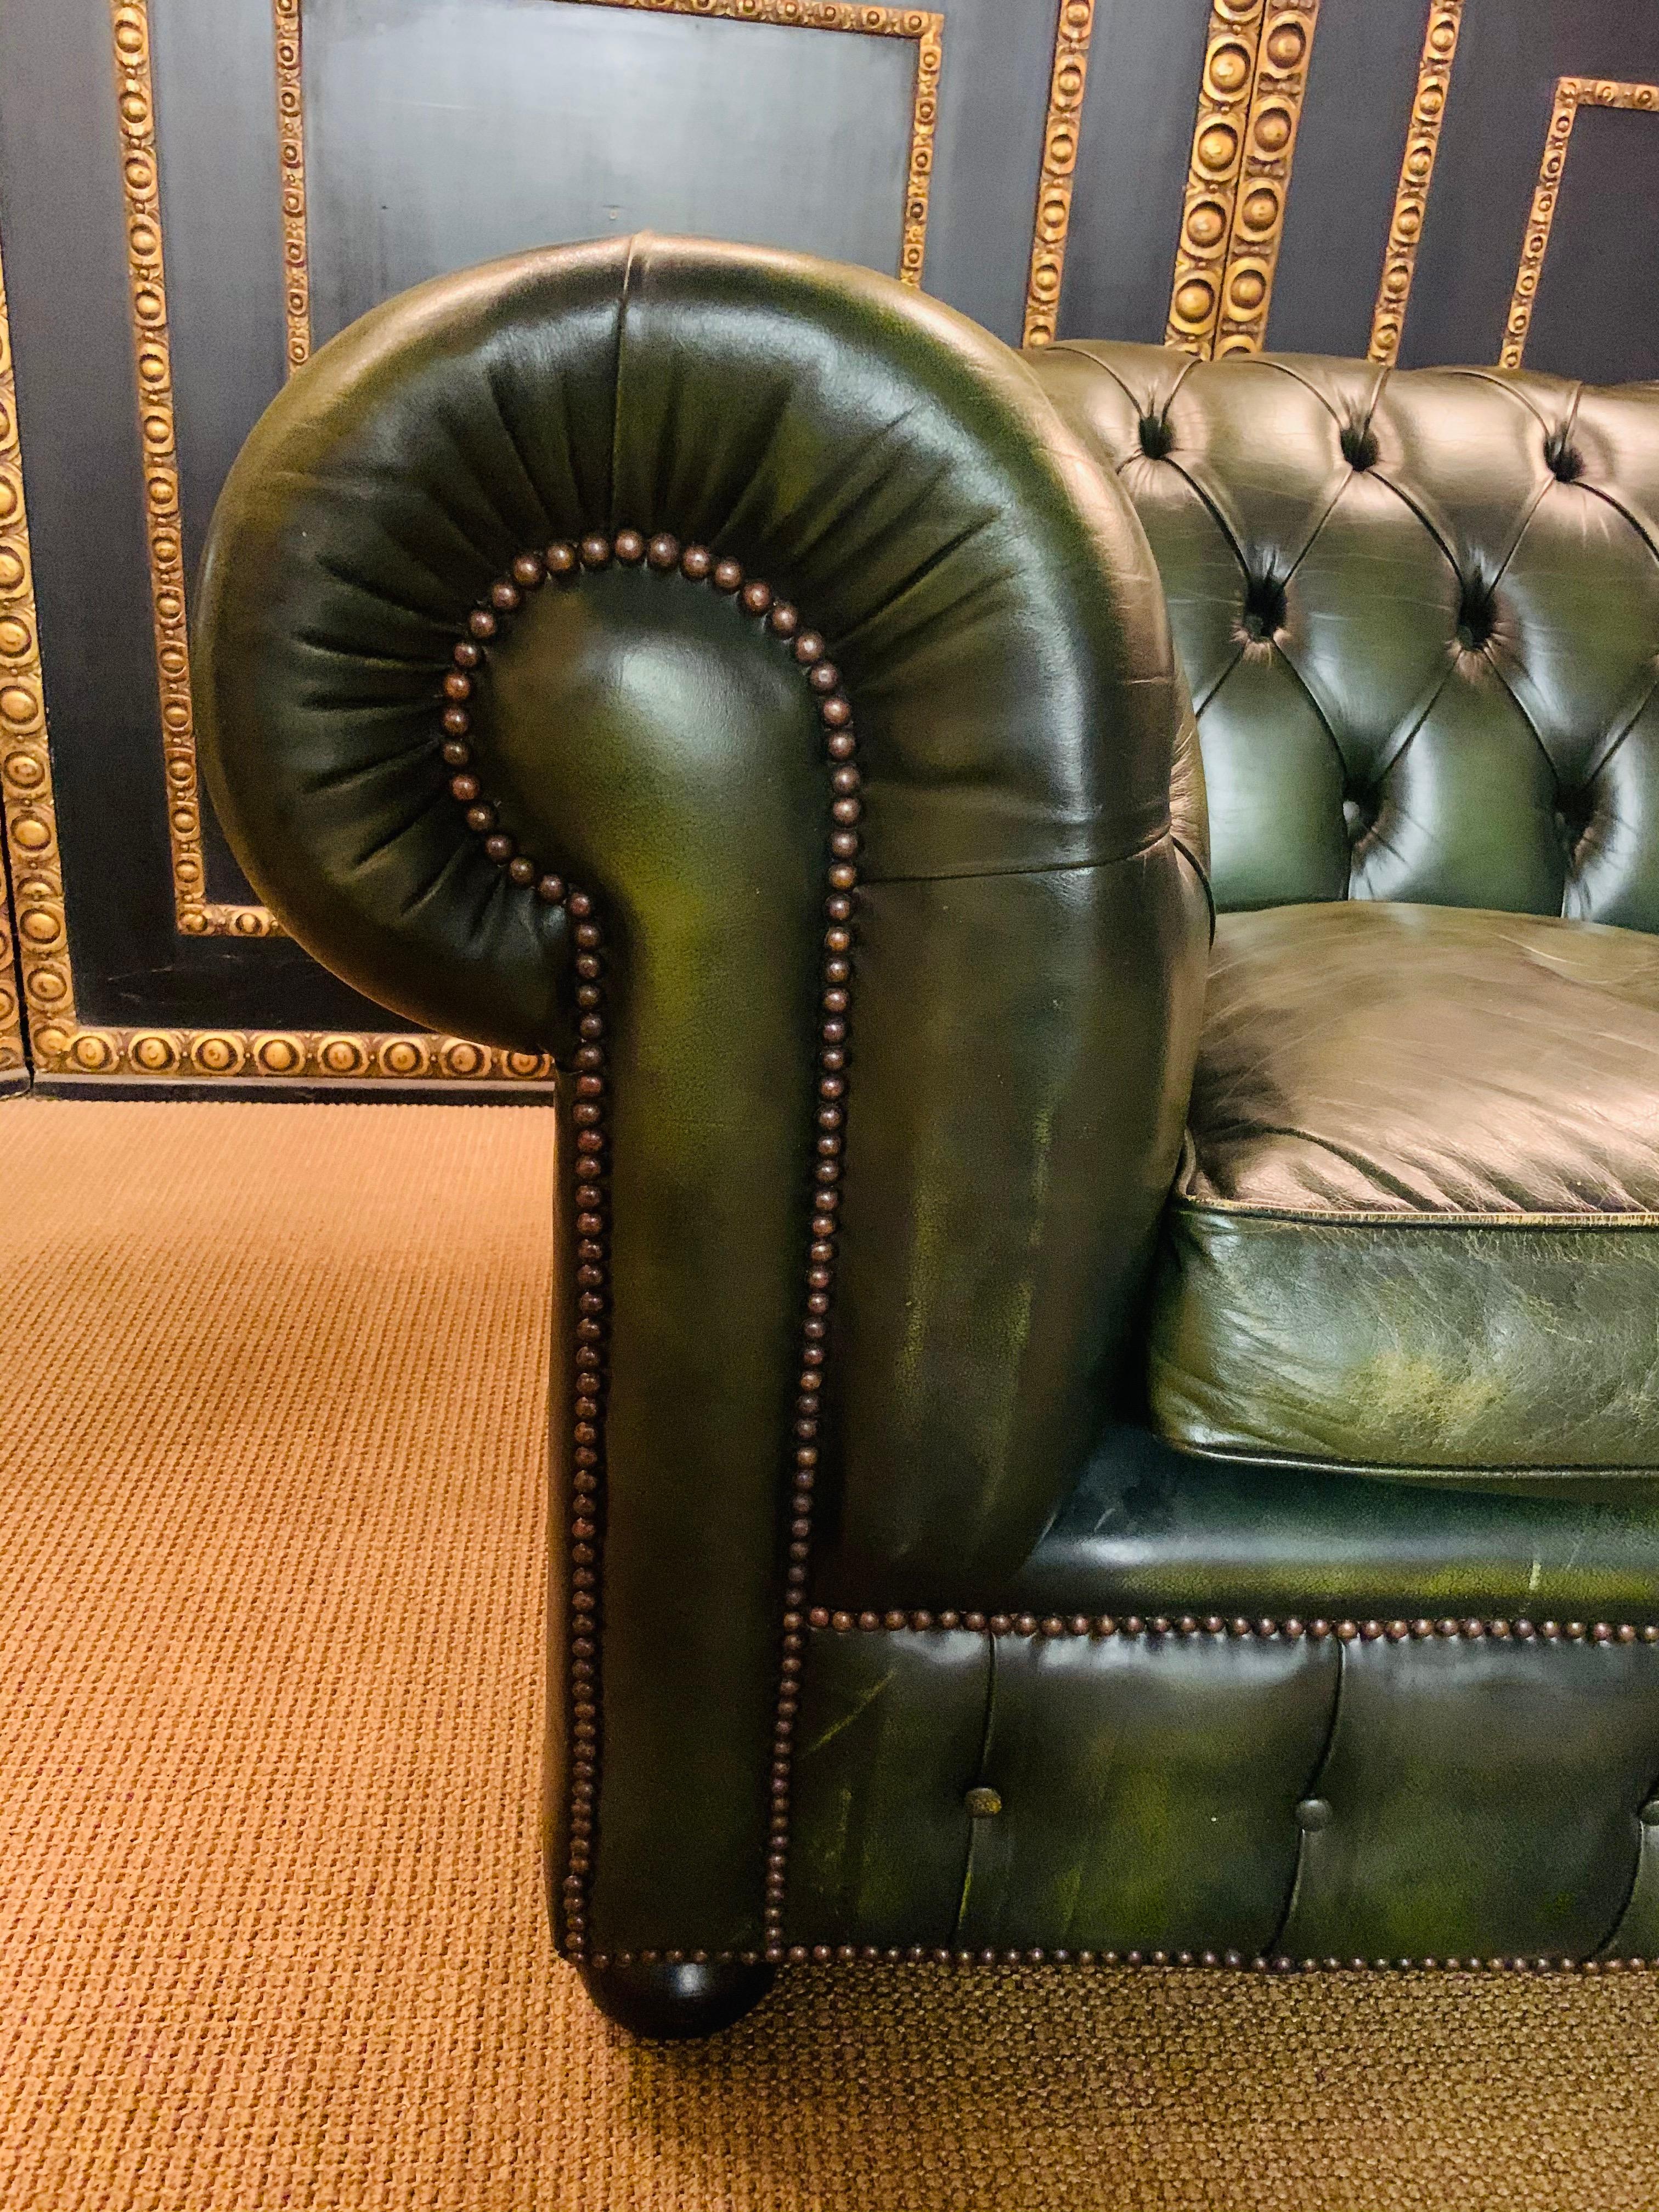 20th Century Original English Dark Green Chesterfield Leather Two-Seat Sofa